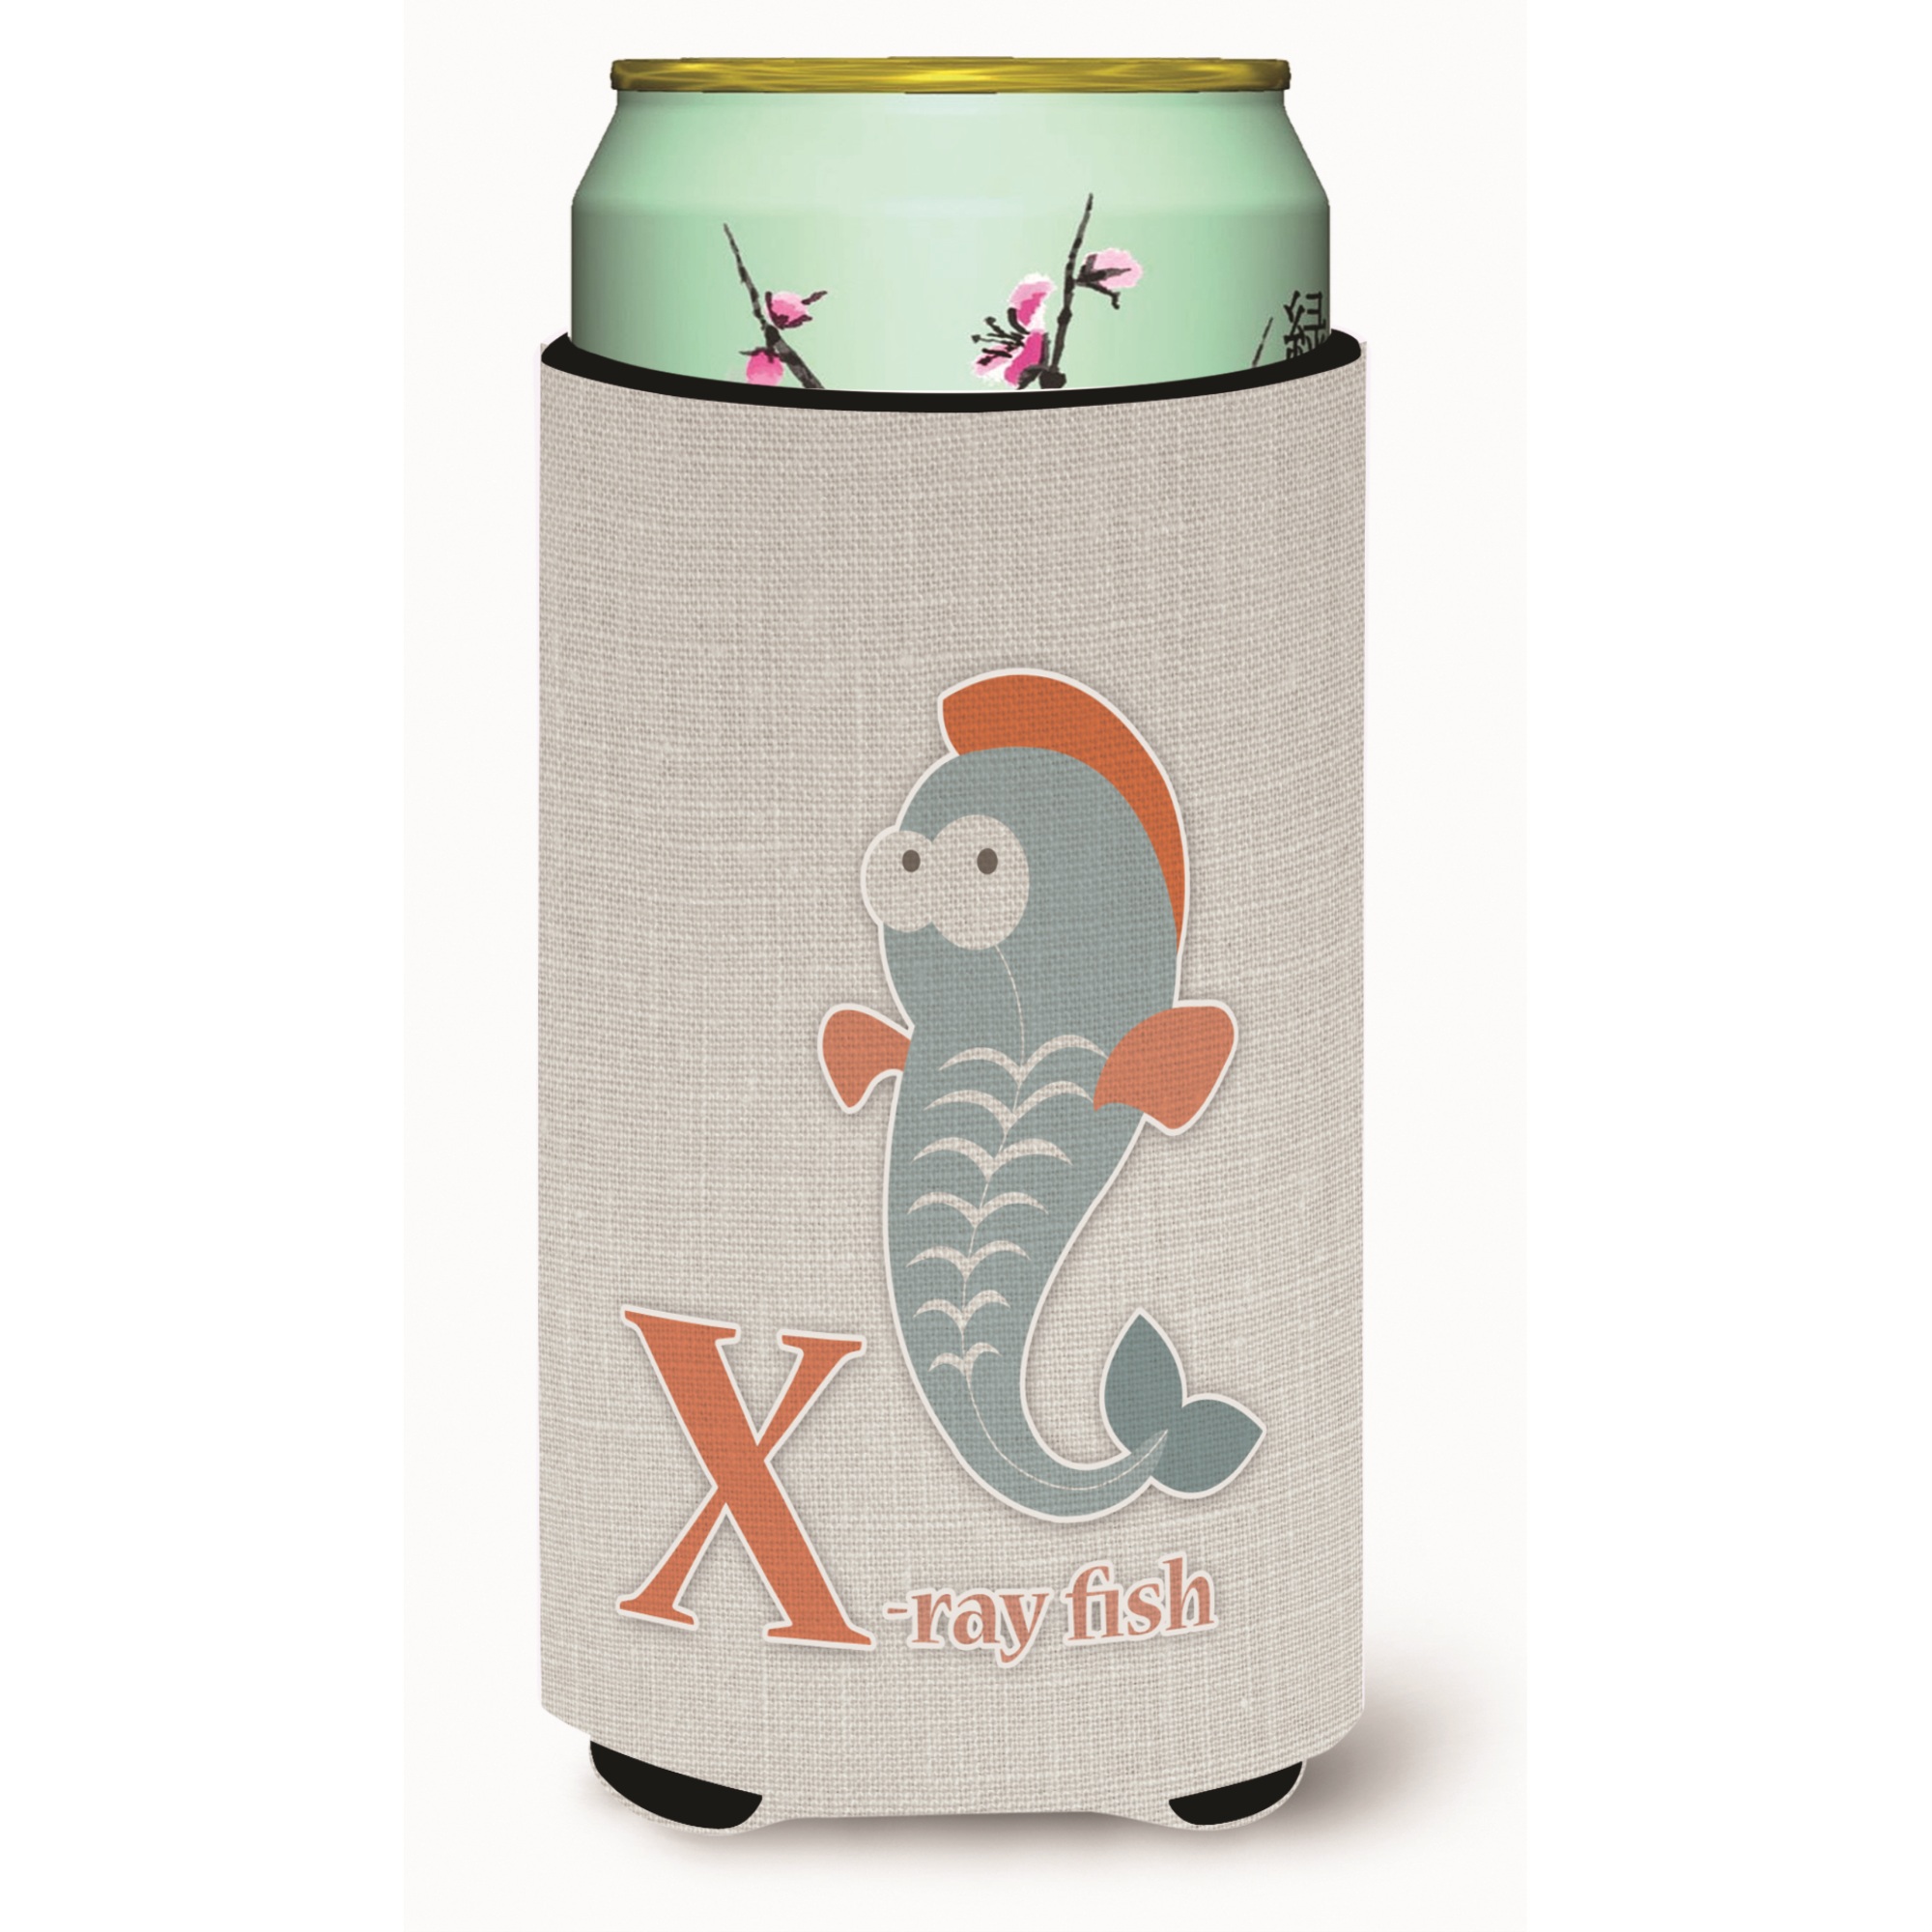 Caroline's Treasures Alphabet x For Xray Fish Tall Boy Beverage Insulator Hugger, Multicolor